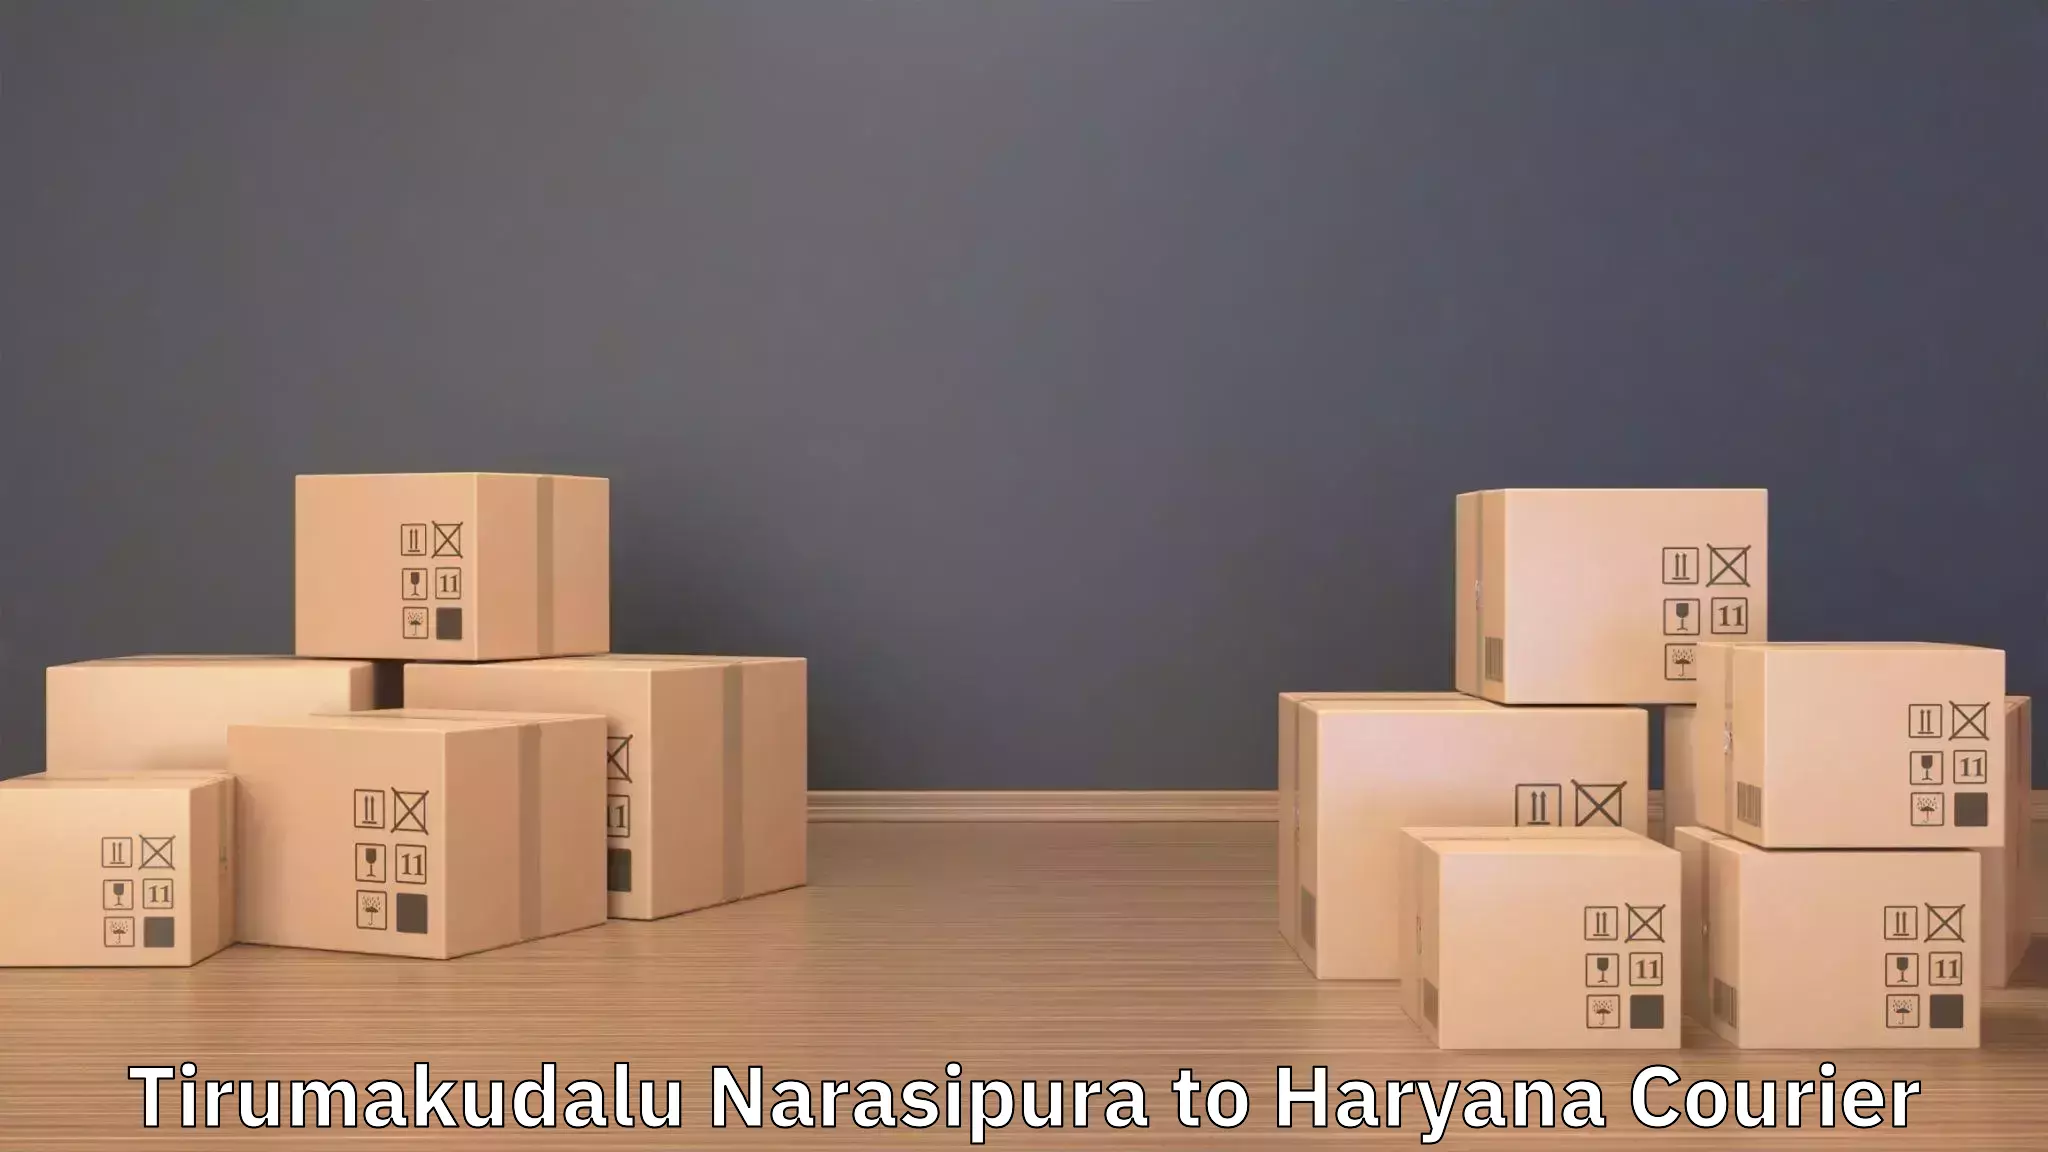 Furniture moving specialists Tirumakudalu Narasipura to Haryana